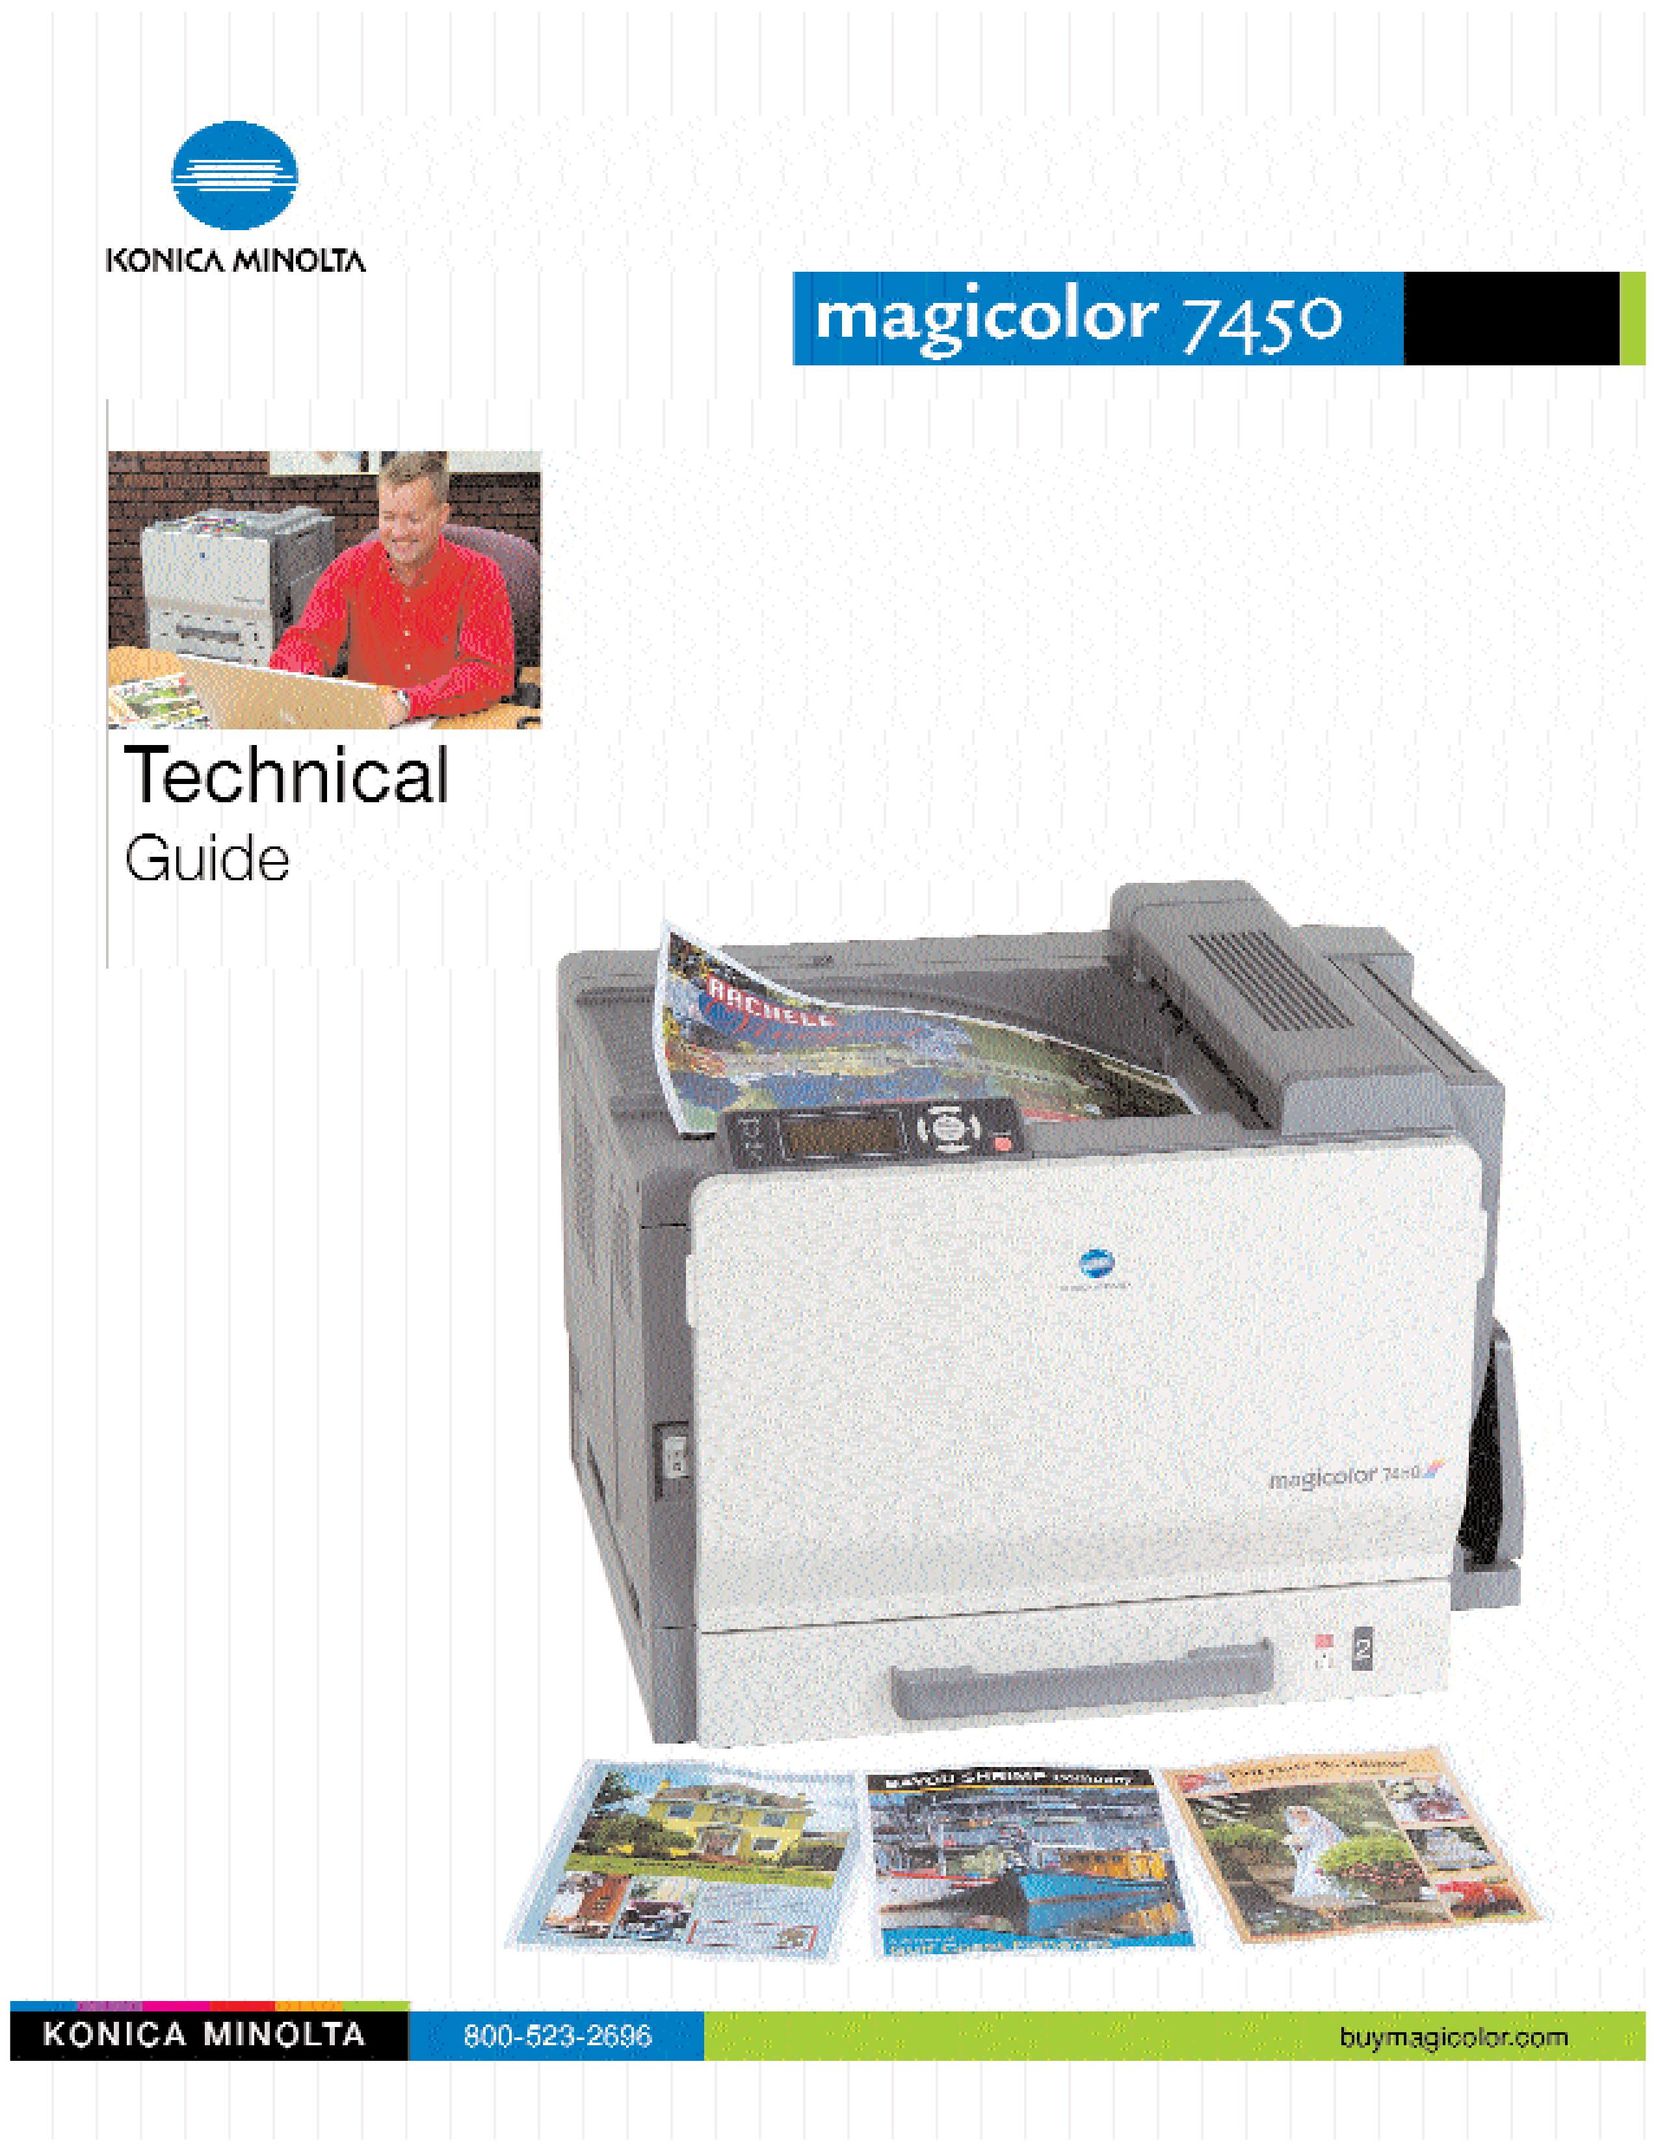 Konica Minolta 7450 Printer User Manual (Page 1)